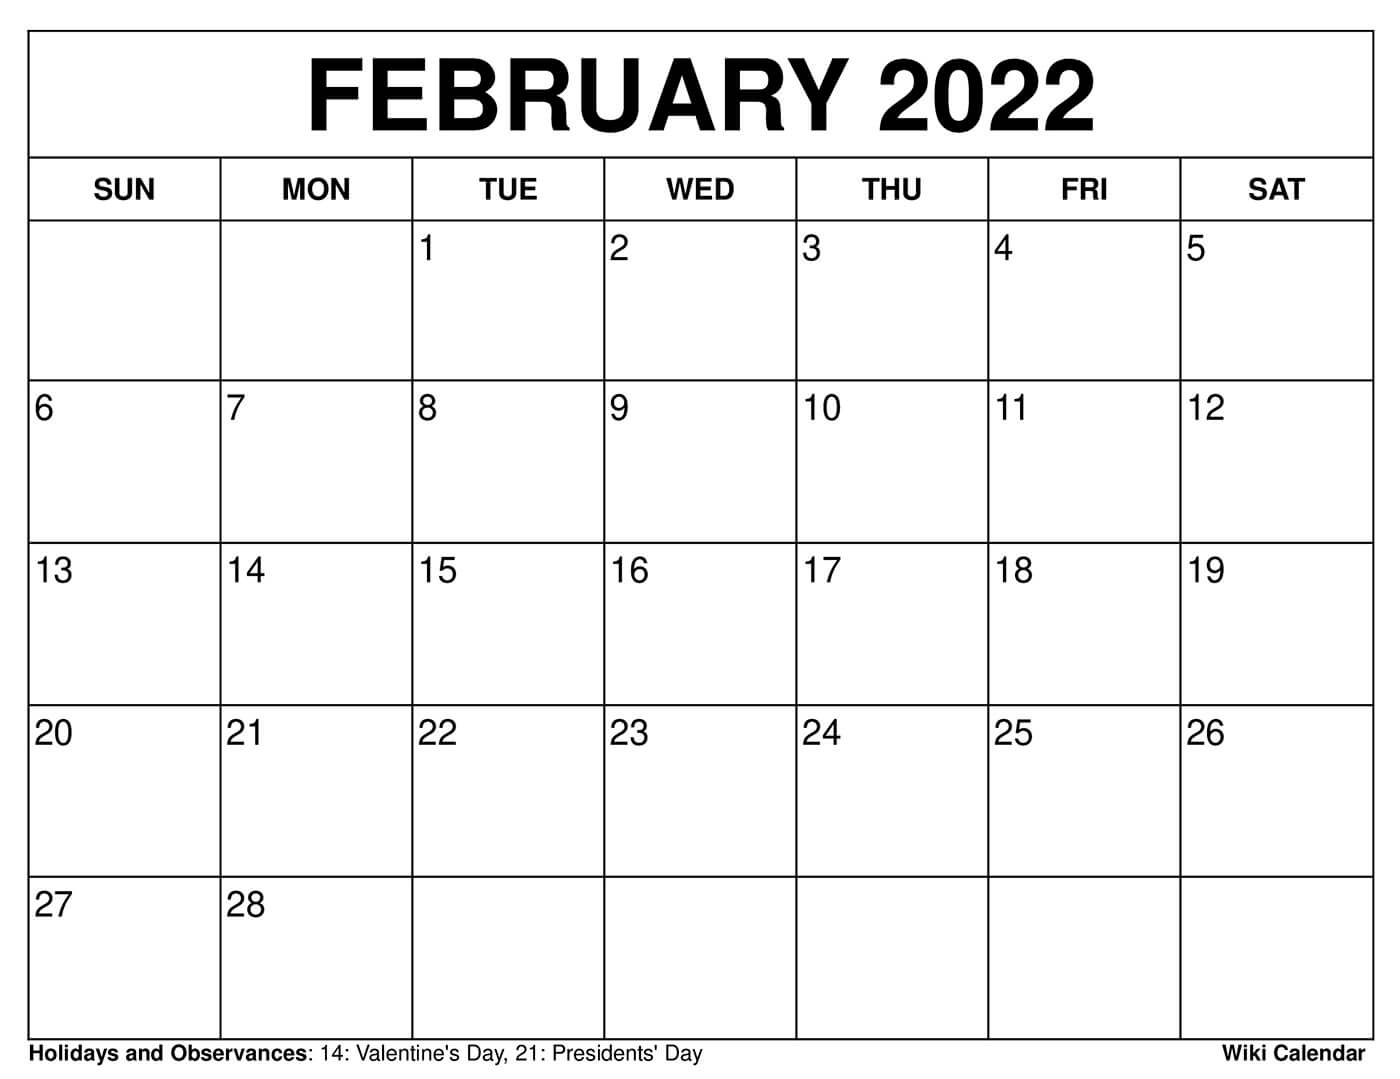 Feb 2022 Calendar Printable Free Free Printable February 2022 Calendars - Wiki Calendar